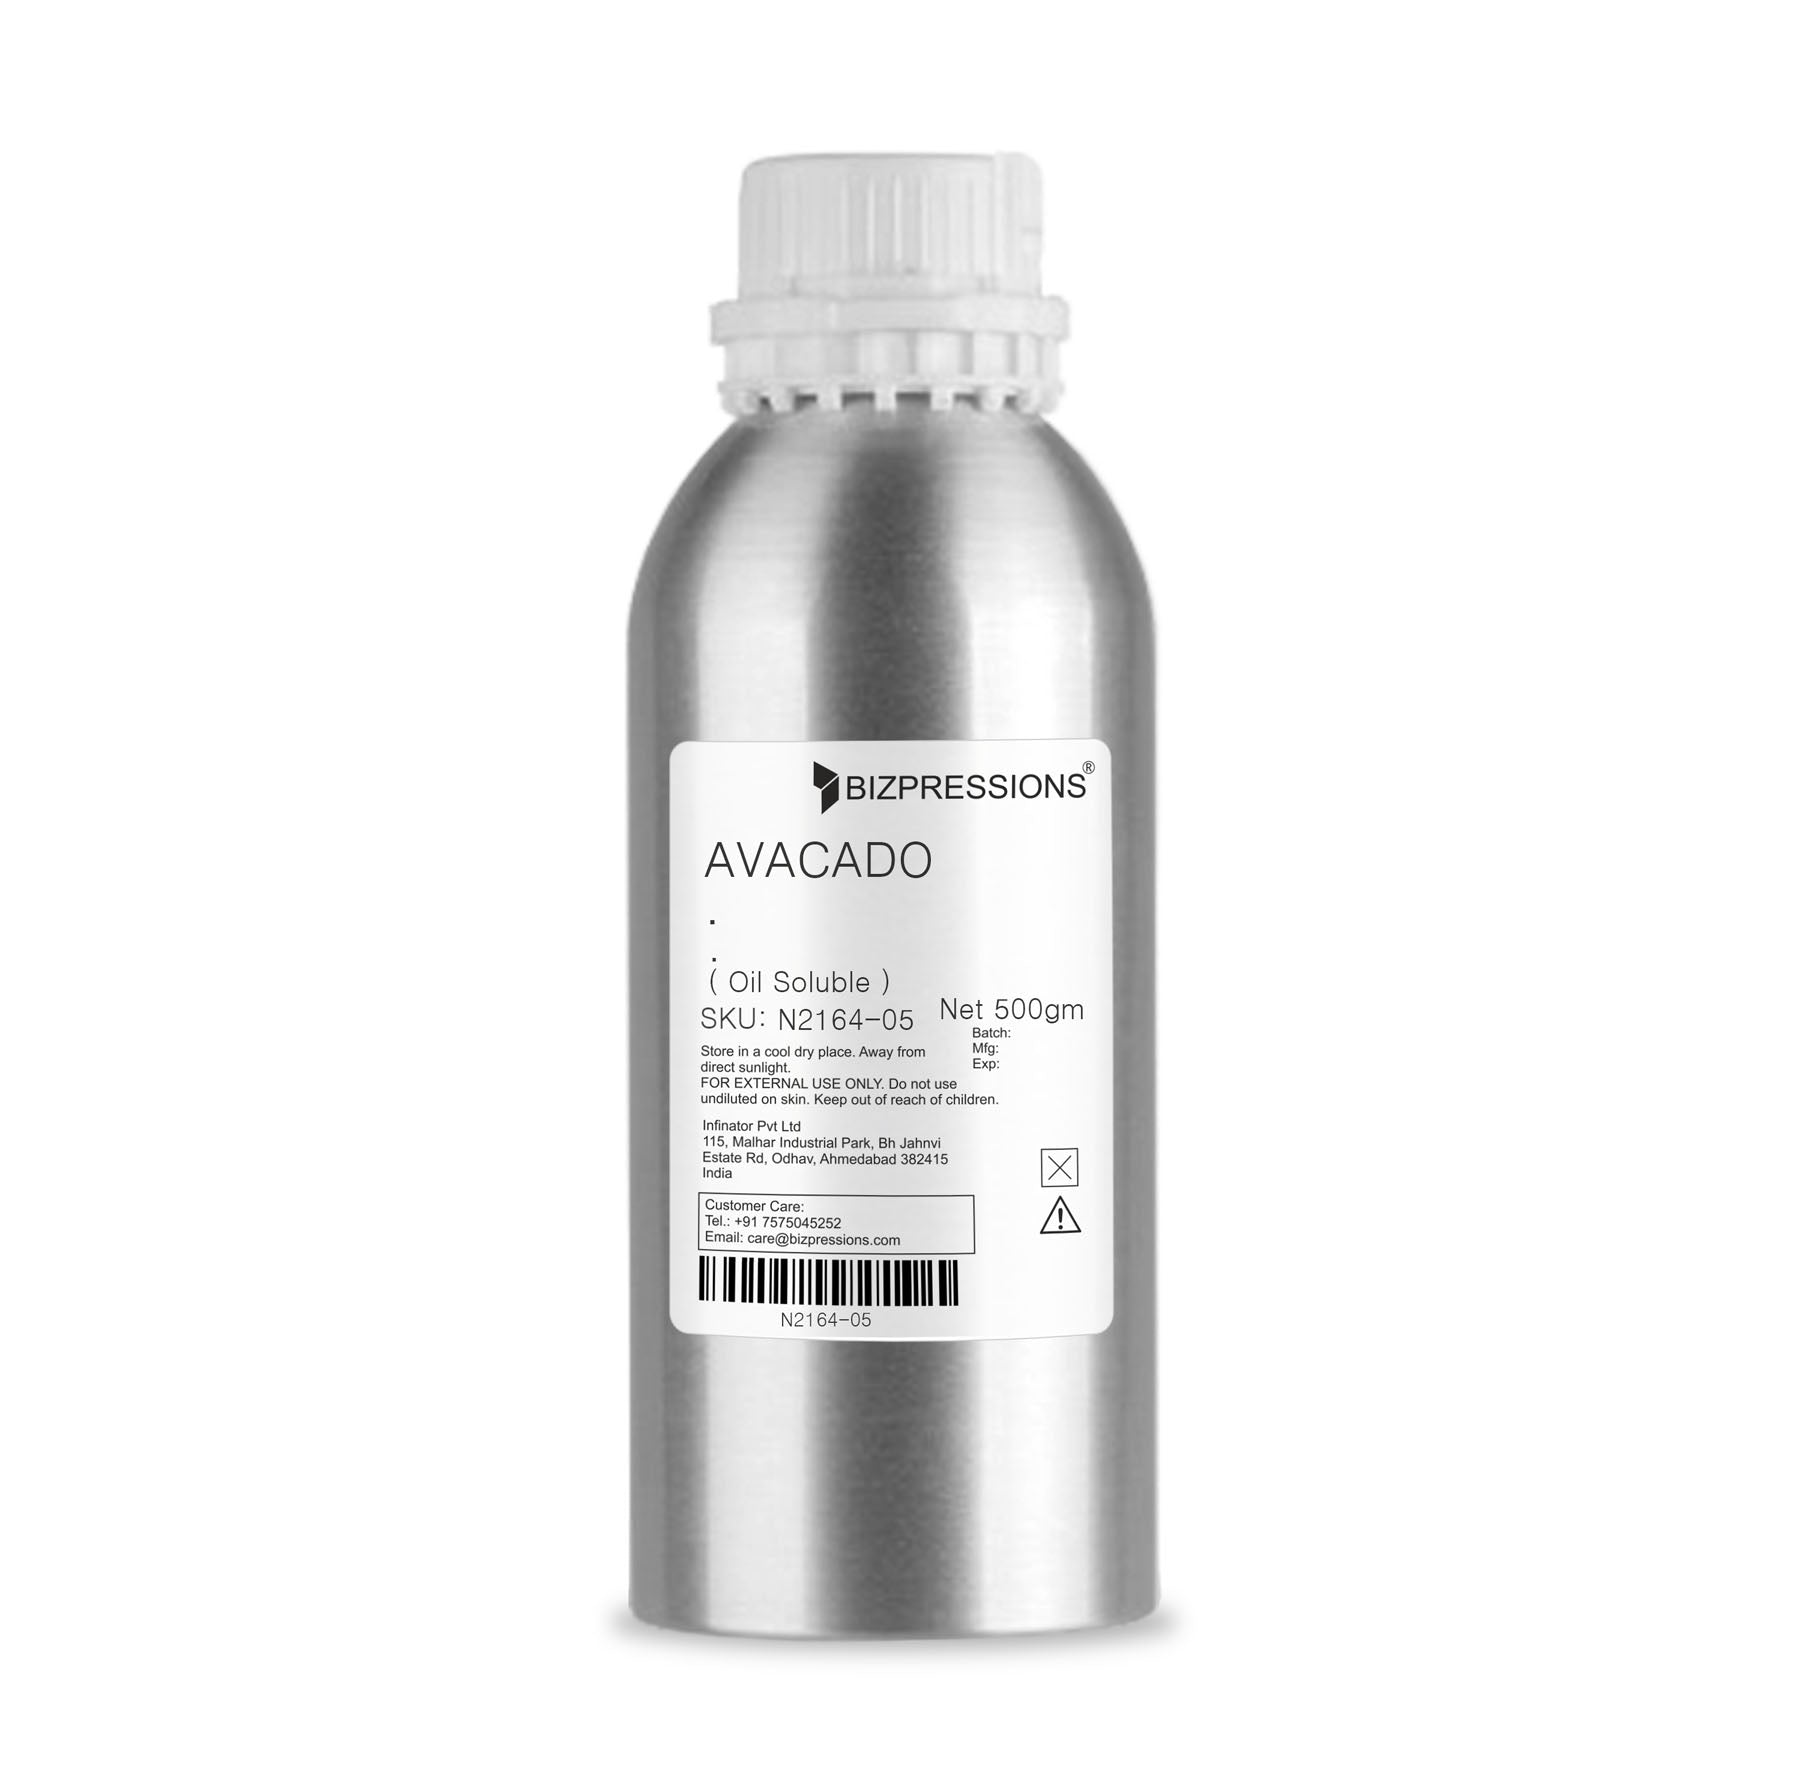 AVACADO - Fragrance ( Oil Soluble ) - 500 gm